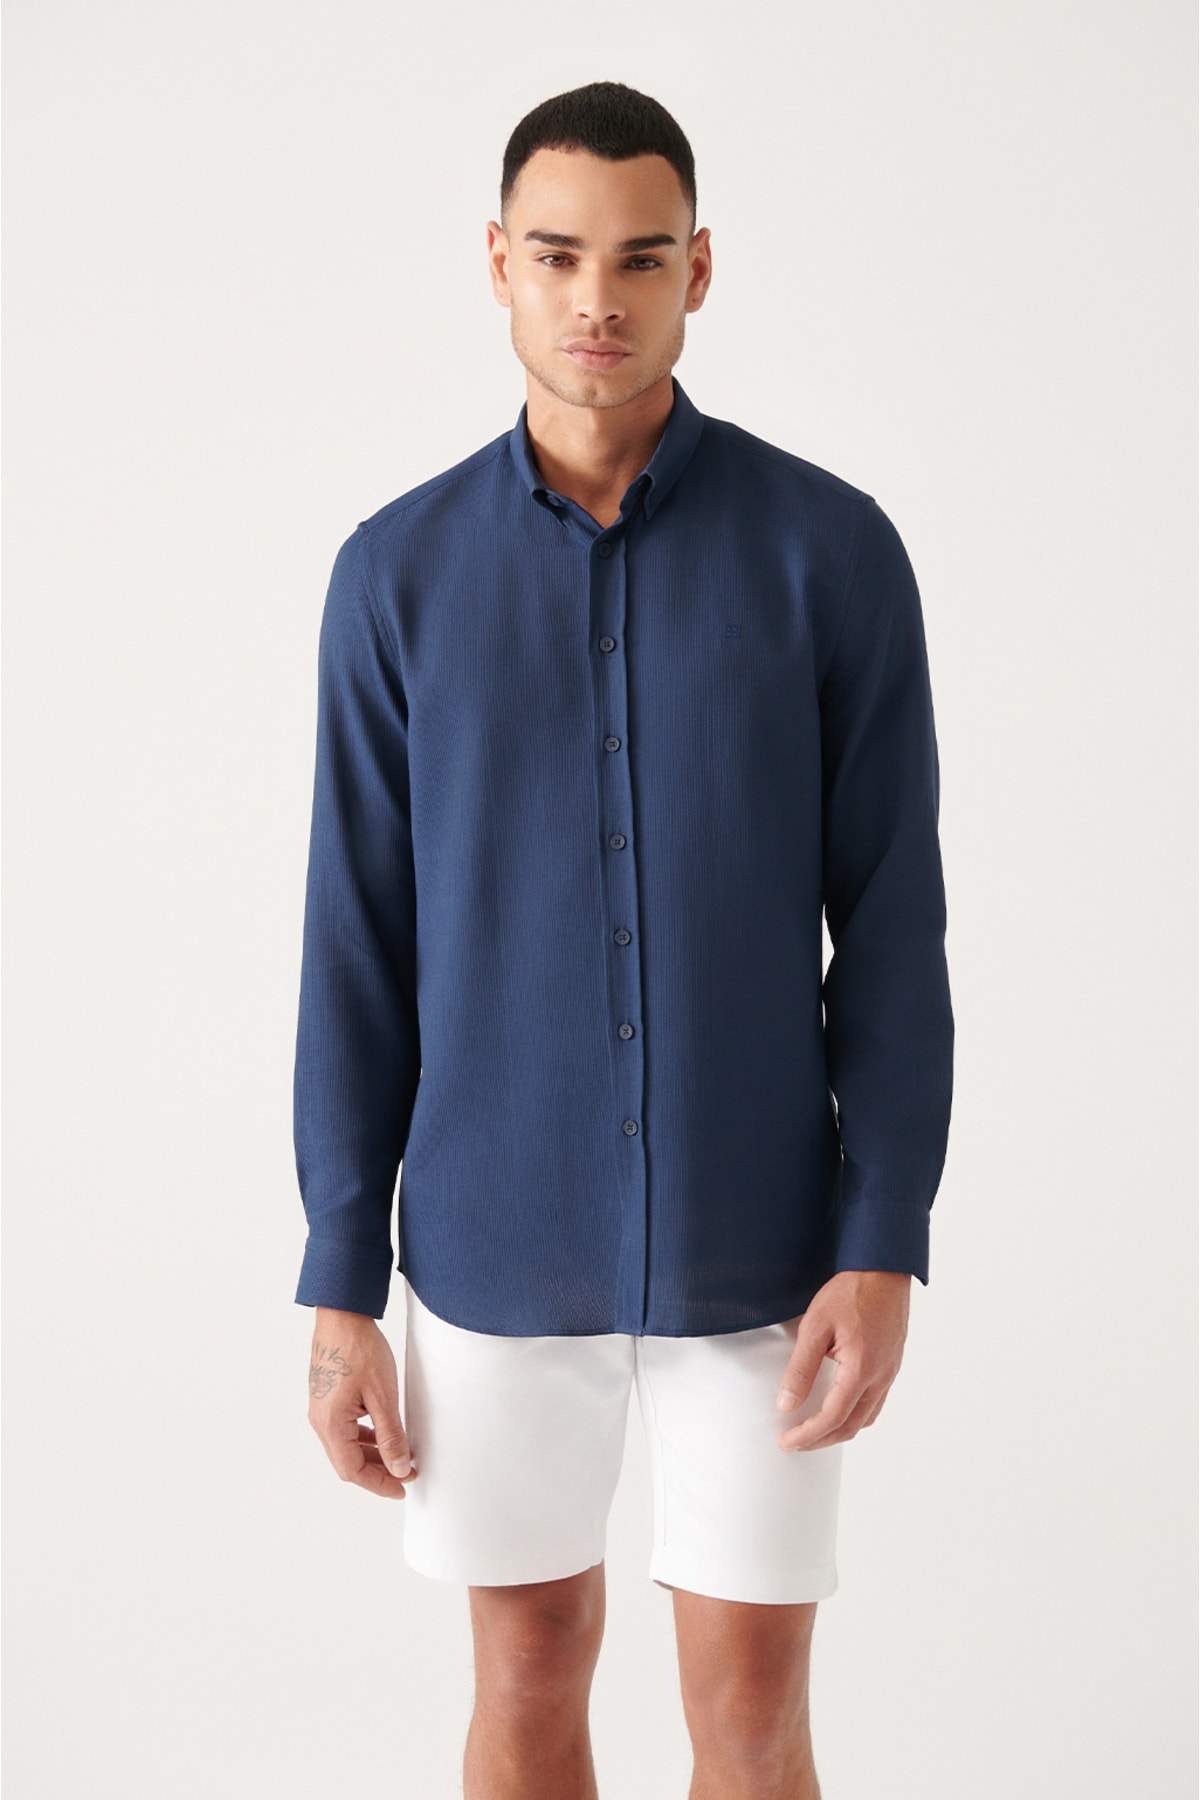 mens-indigo-buttoned-collar-textured-cotton-slim-fit-shirt